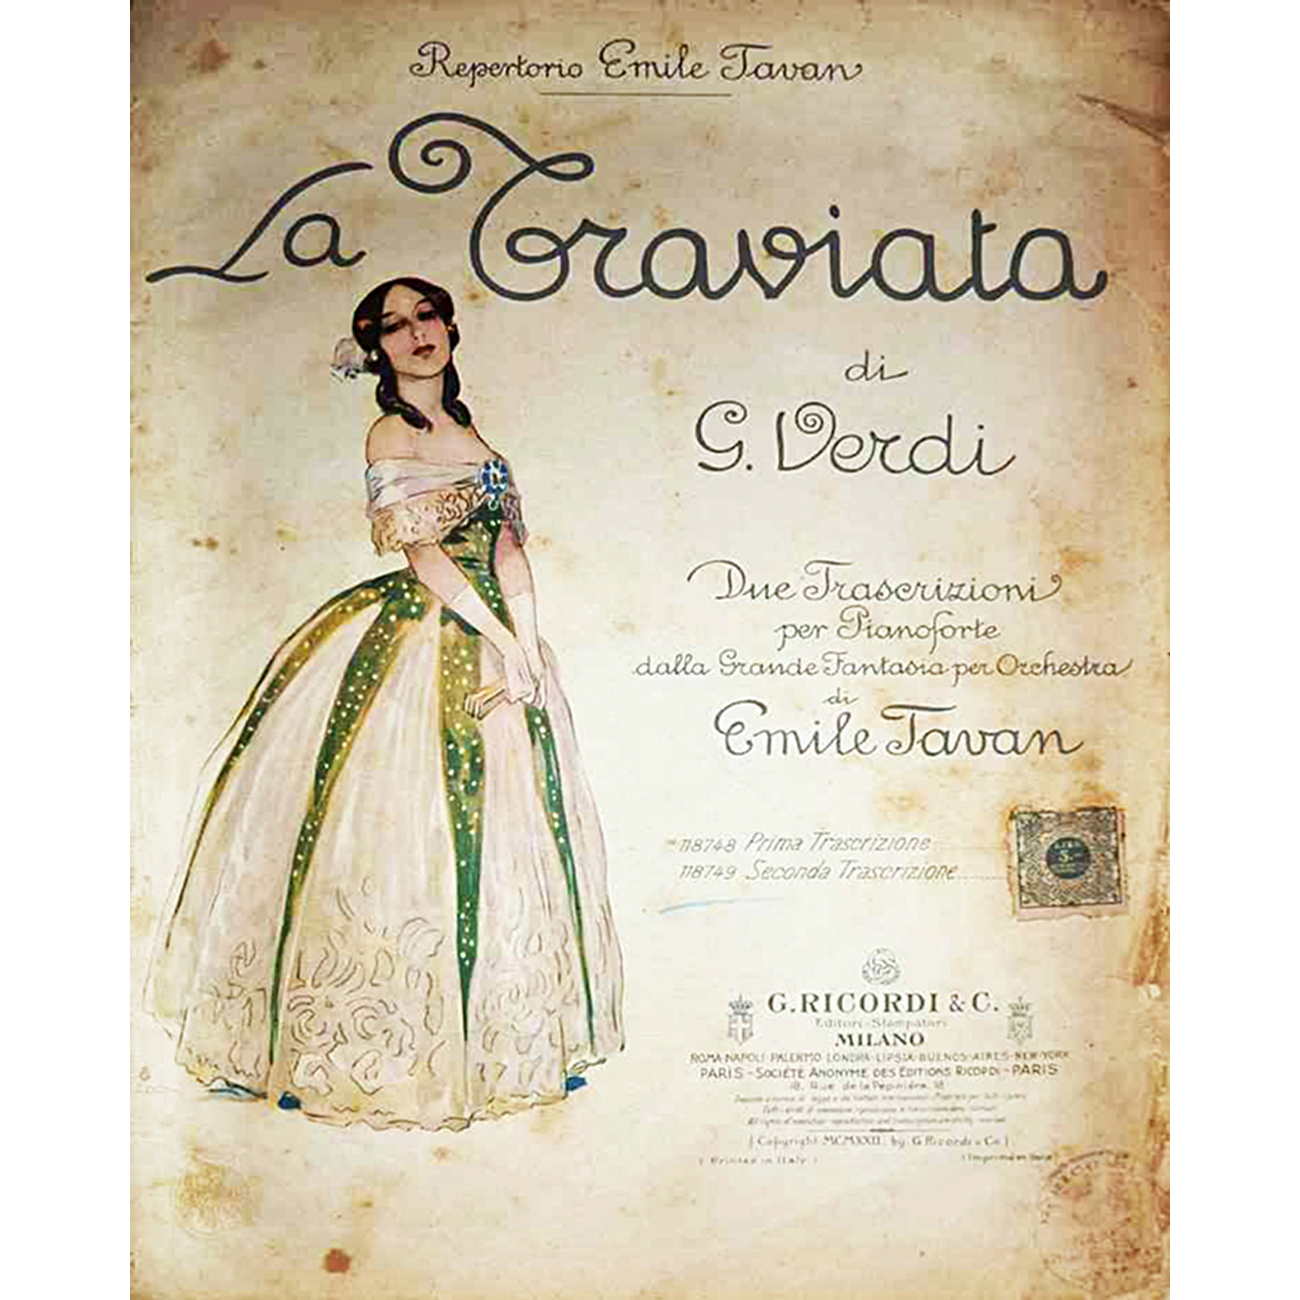 La Traviata di G. Verdi Poster HOME Met Opera Shop